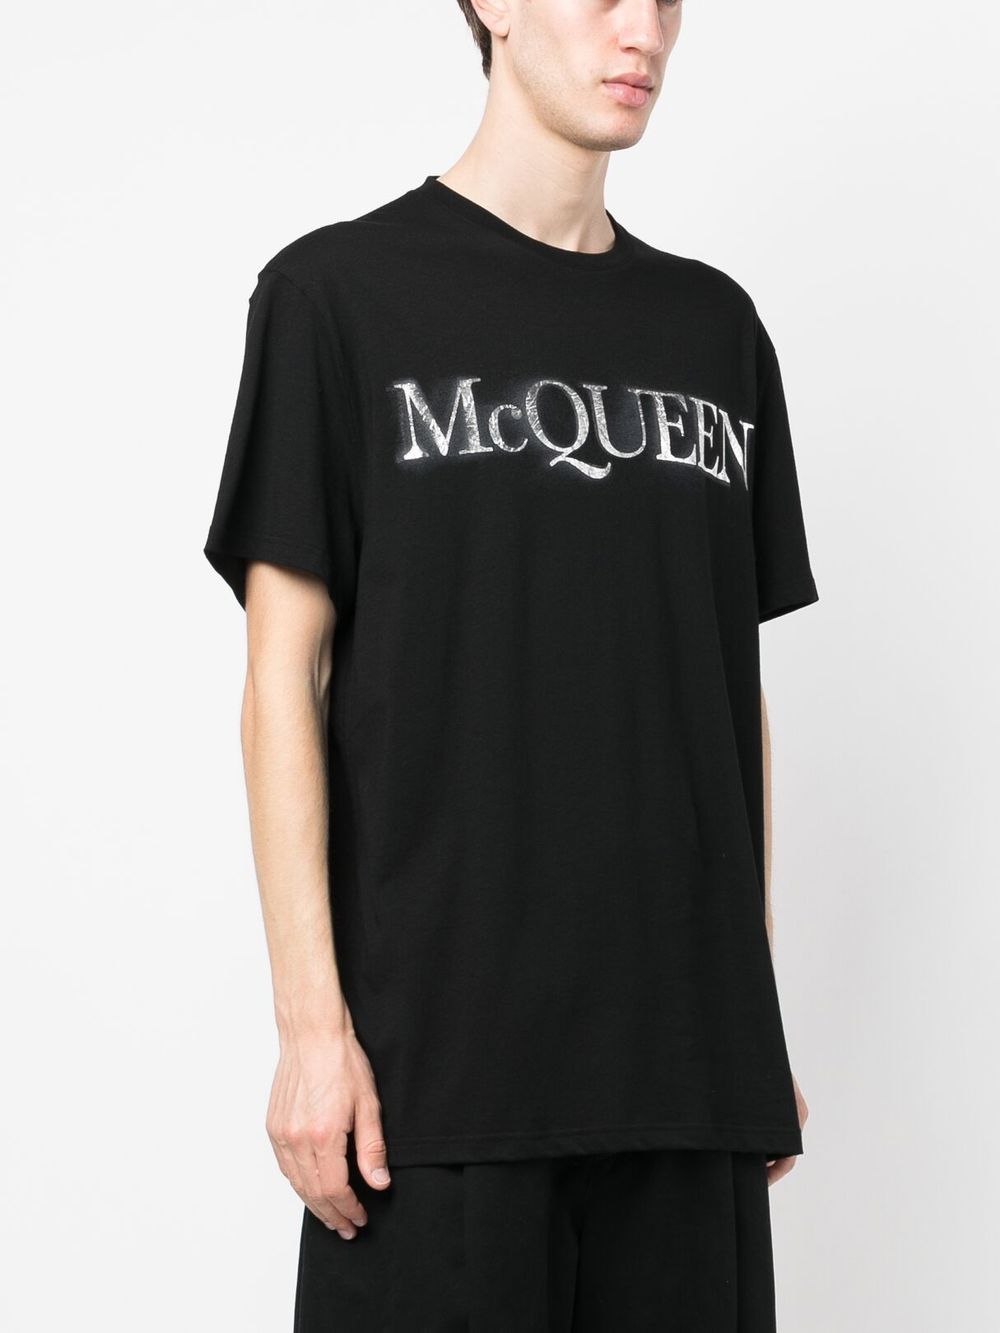 Alexander Mc Queen - T-Shirt noir logo argenté - Lothaire